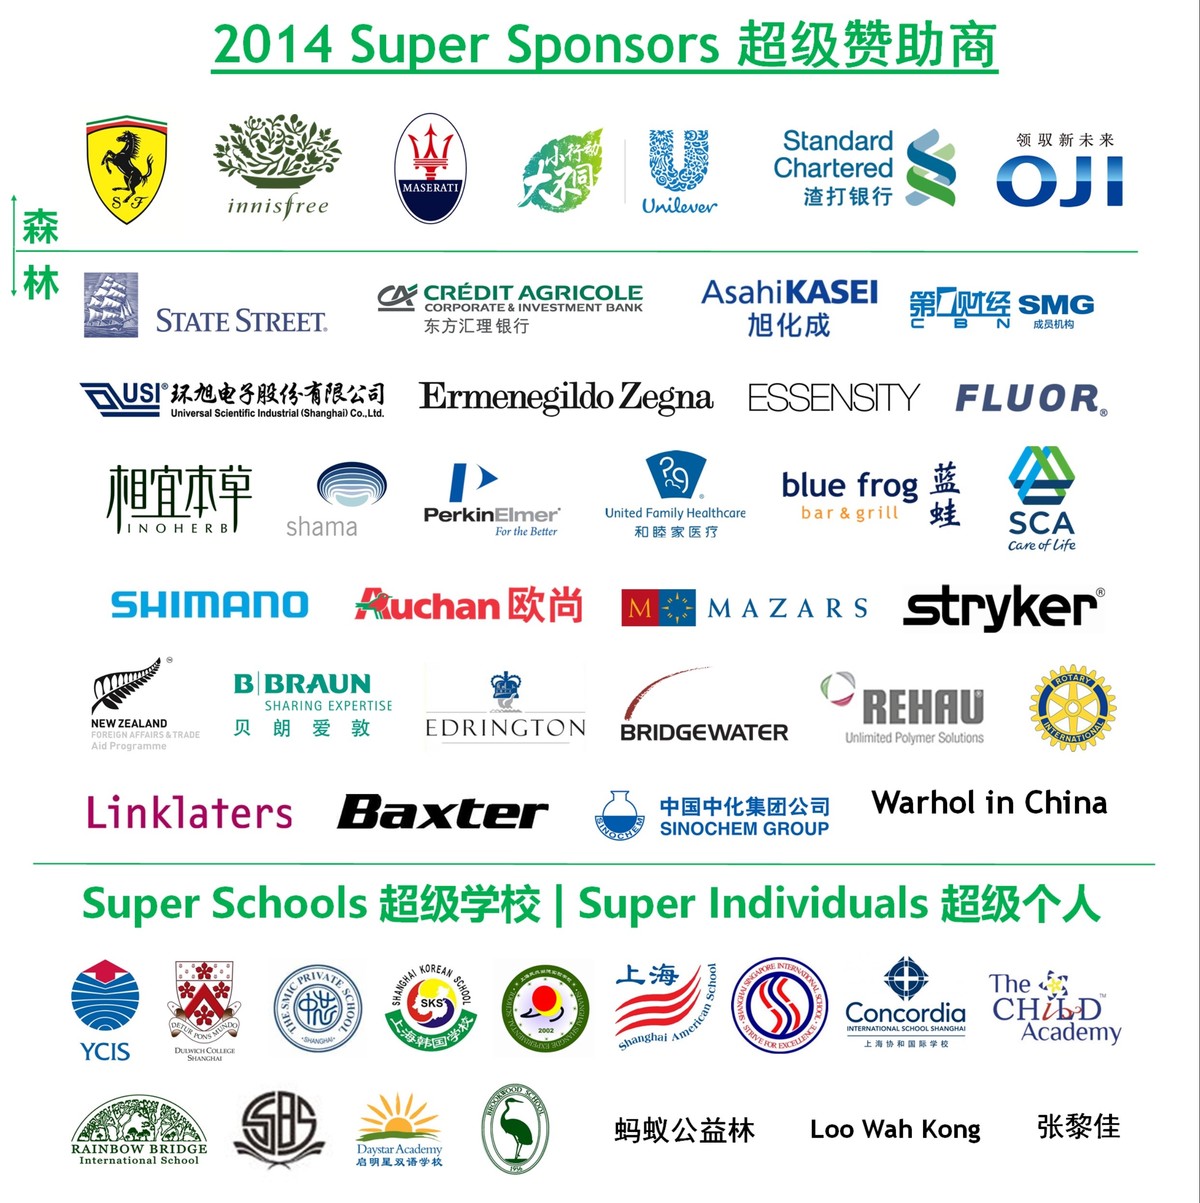 2014 Super Sponsors